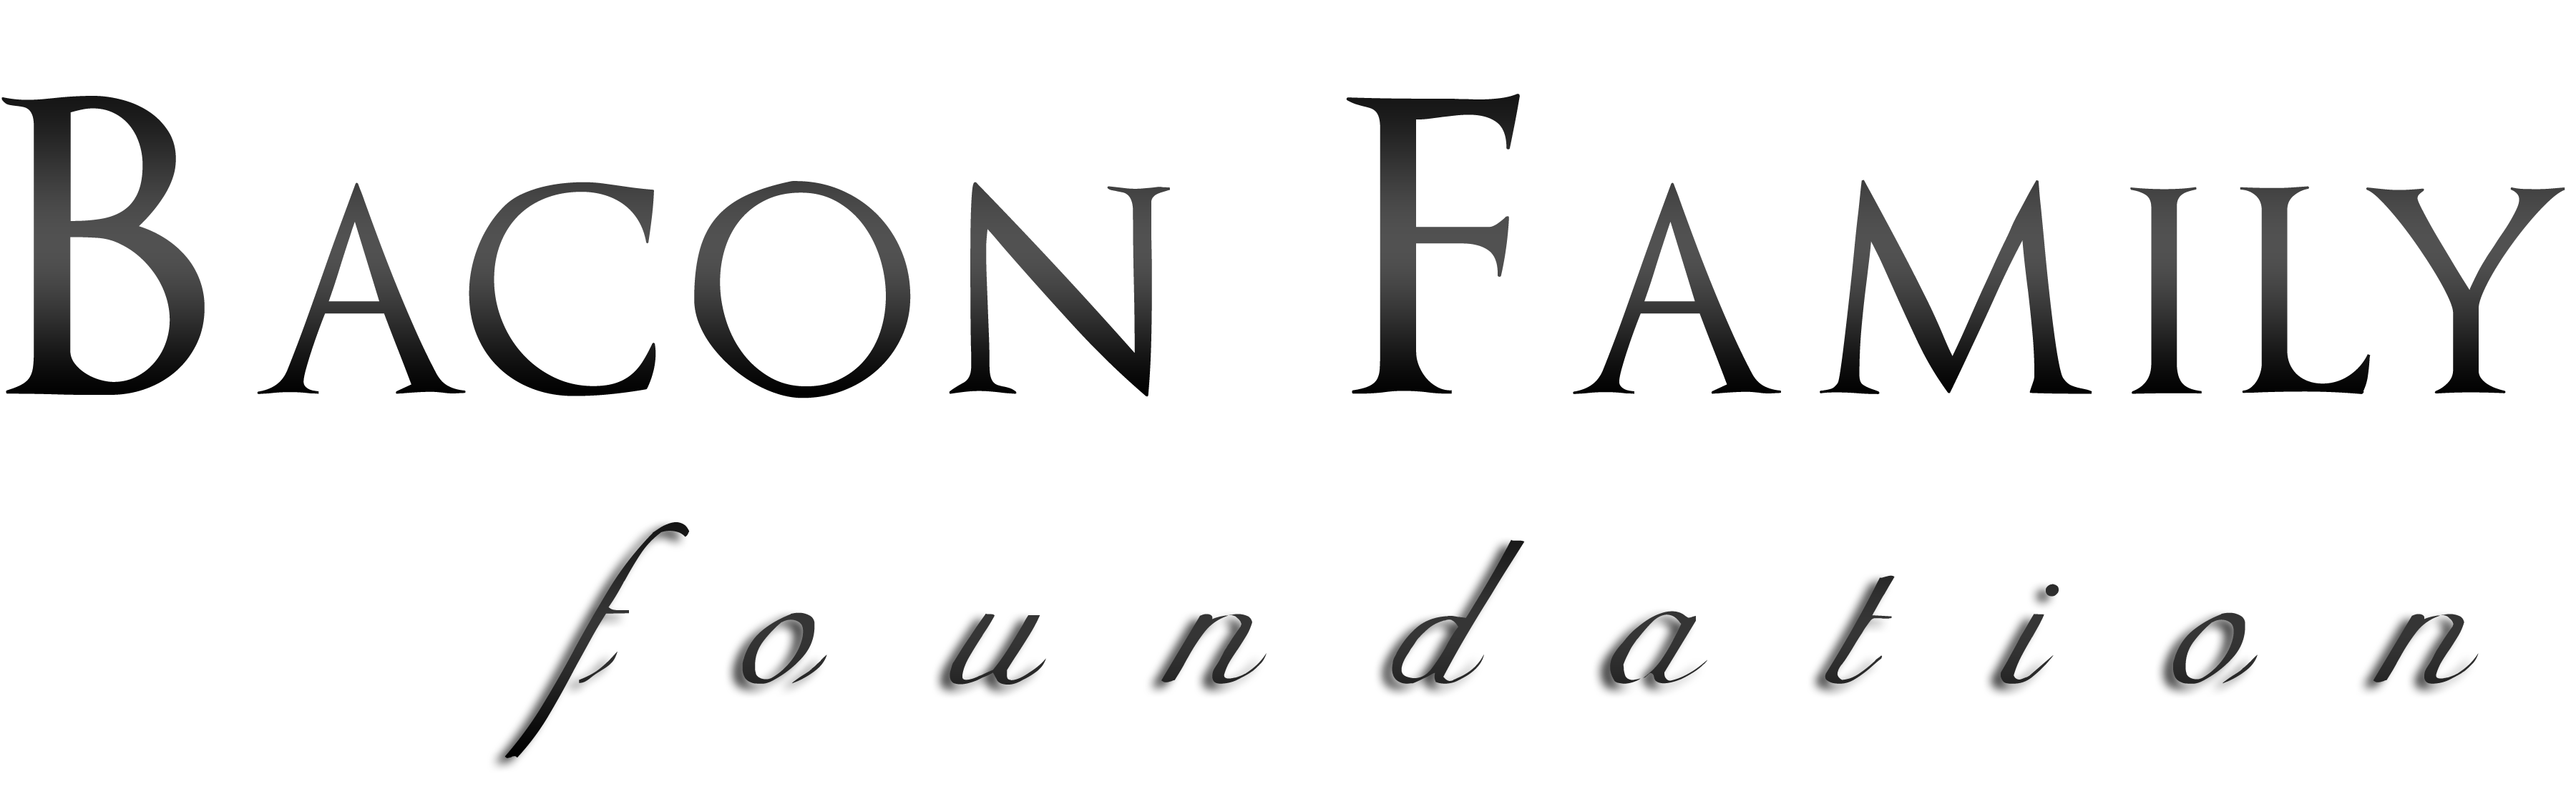 BFF logo